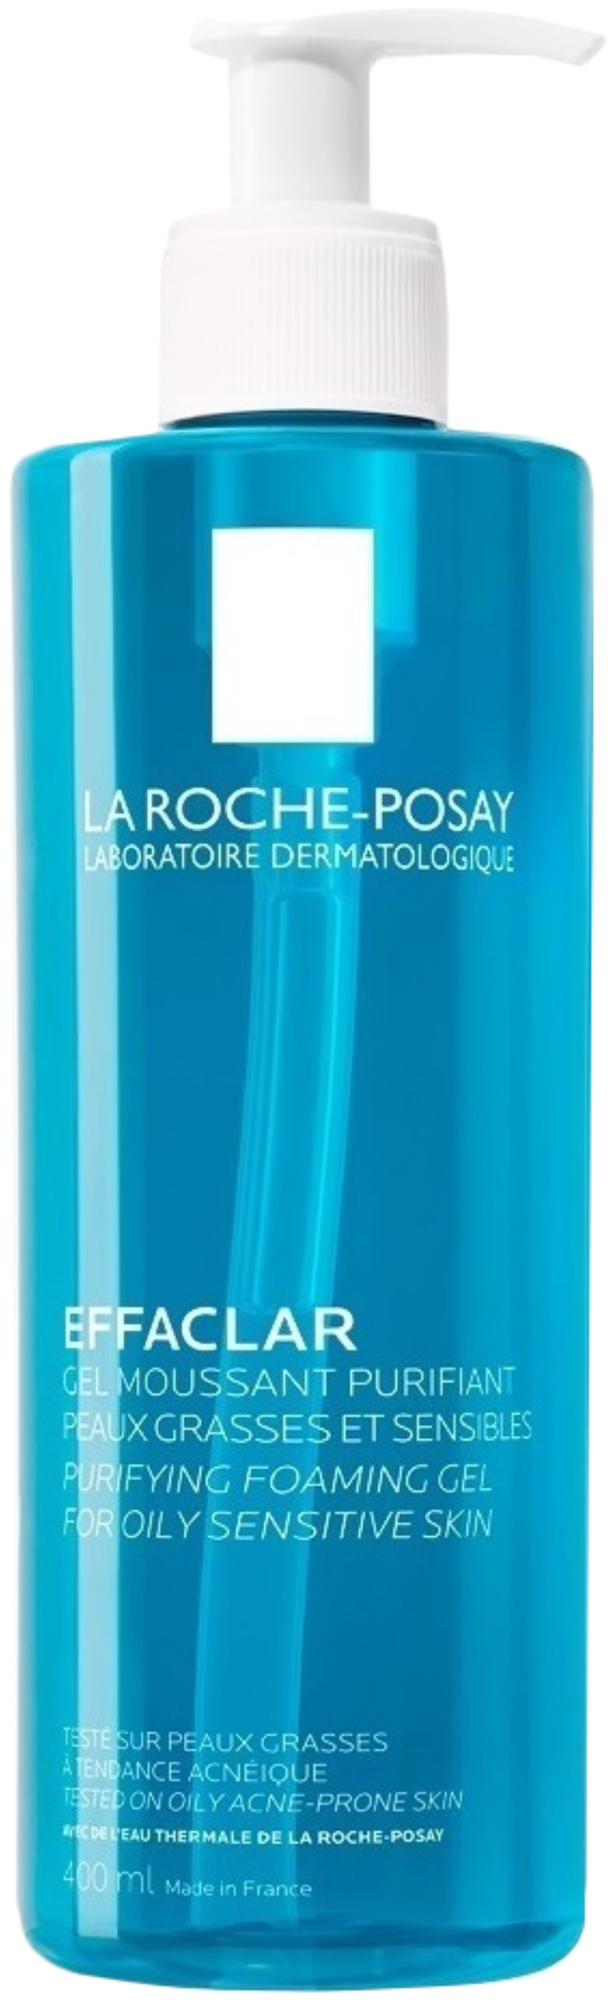 La Roche-Posay гель очищающий пенящийся Effaclar Gel